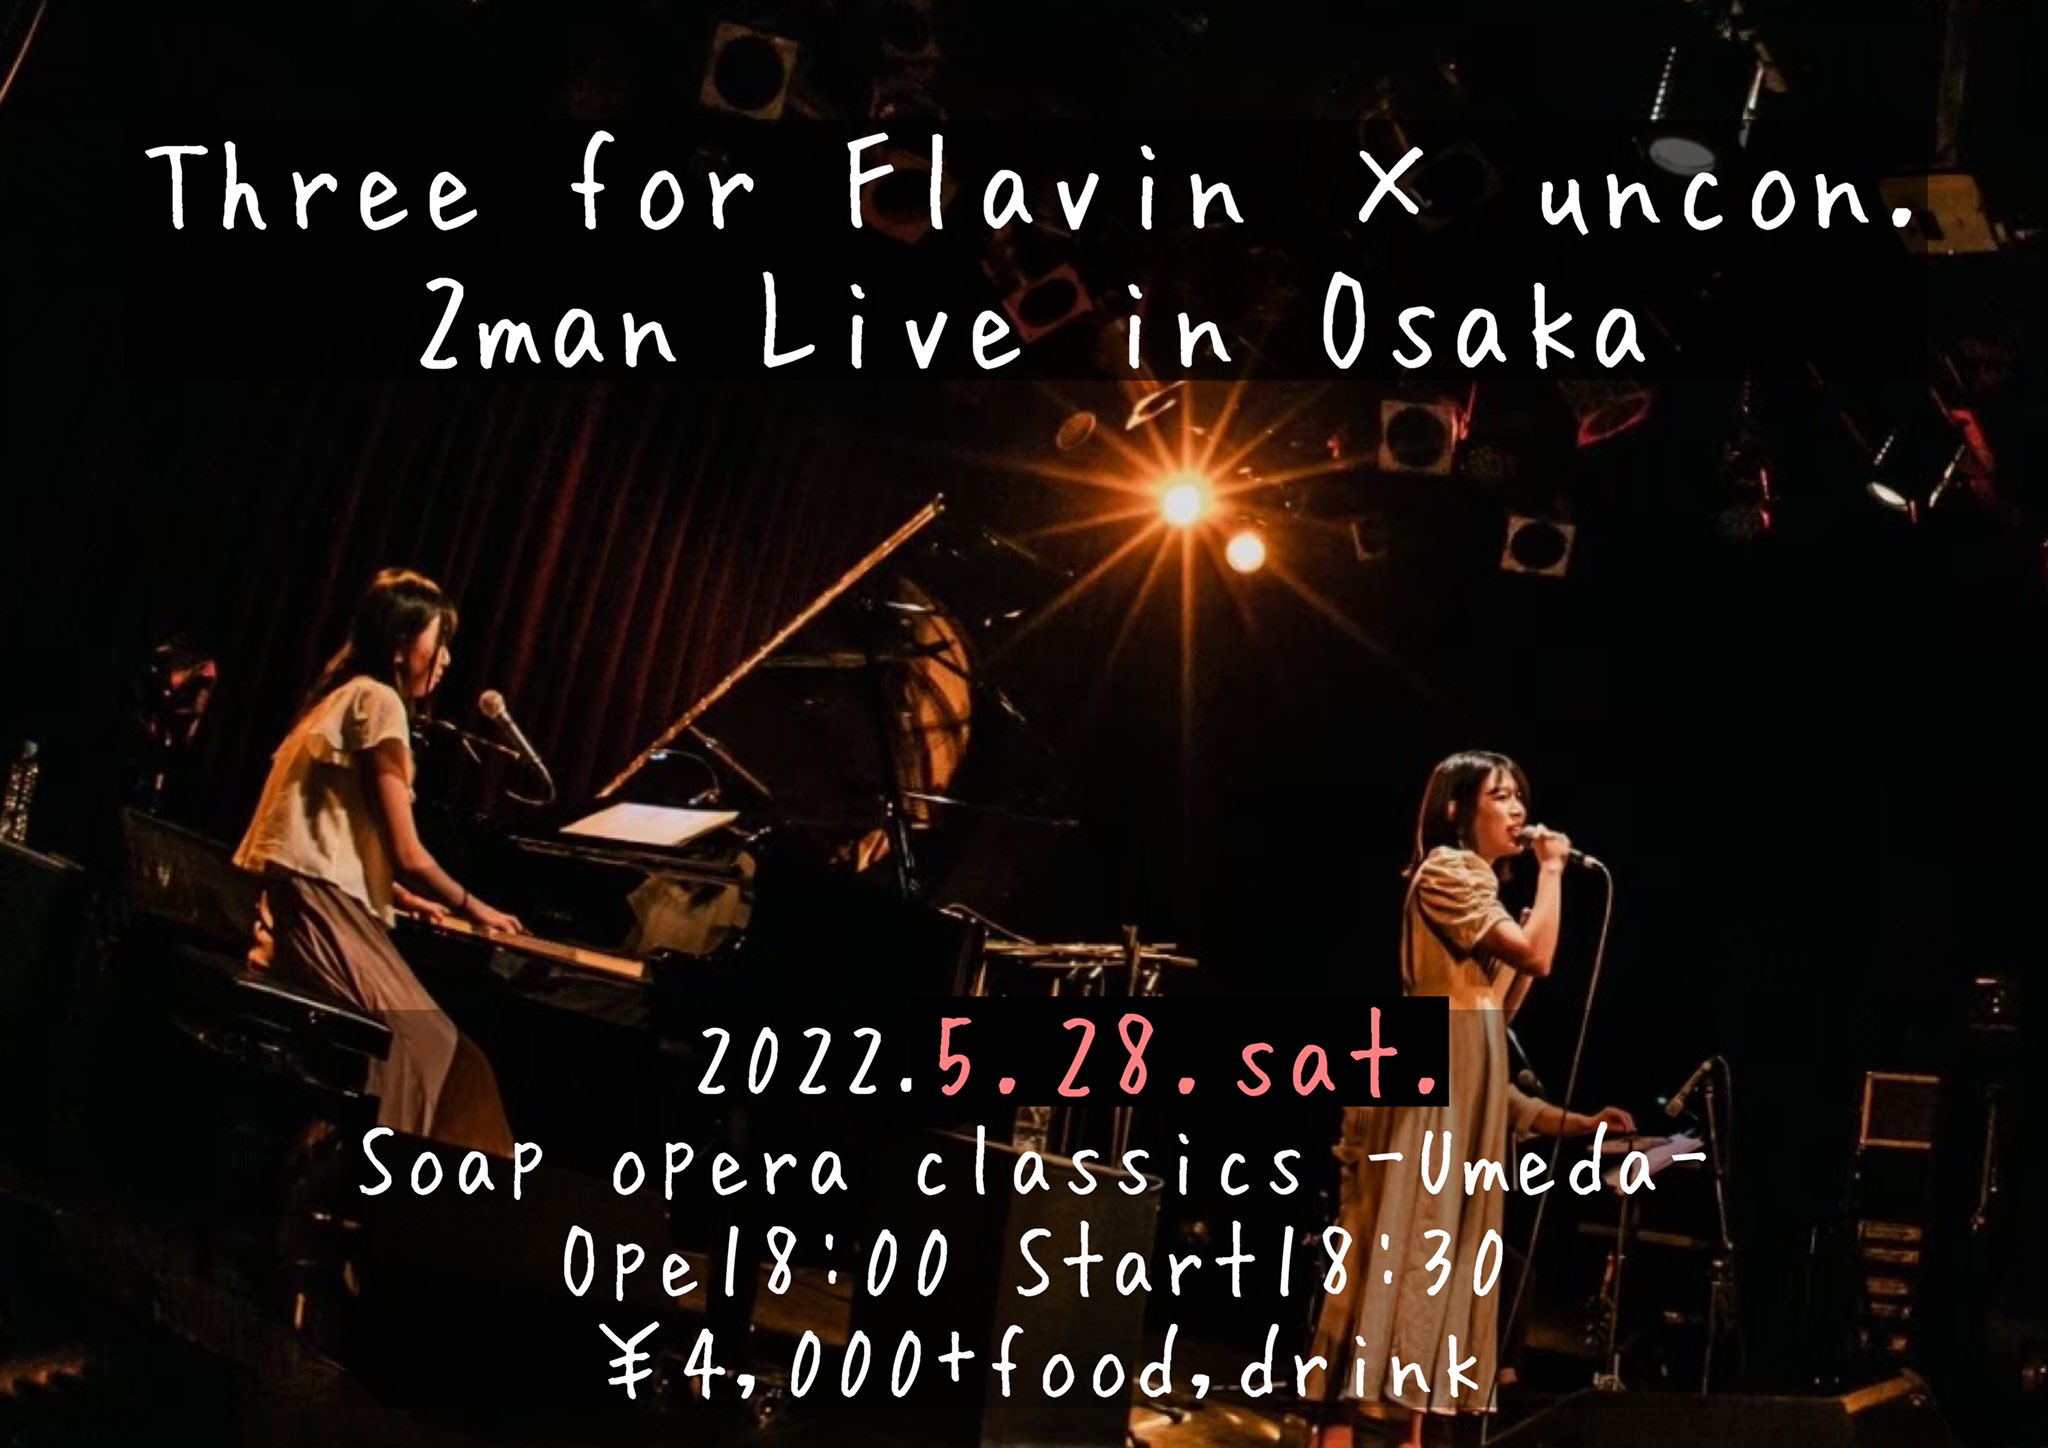 Three for Flavin×uncon. 2man Live in Osaka